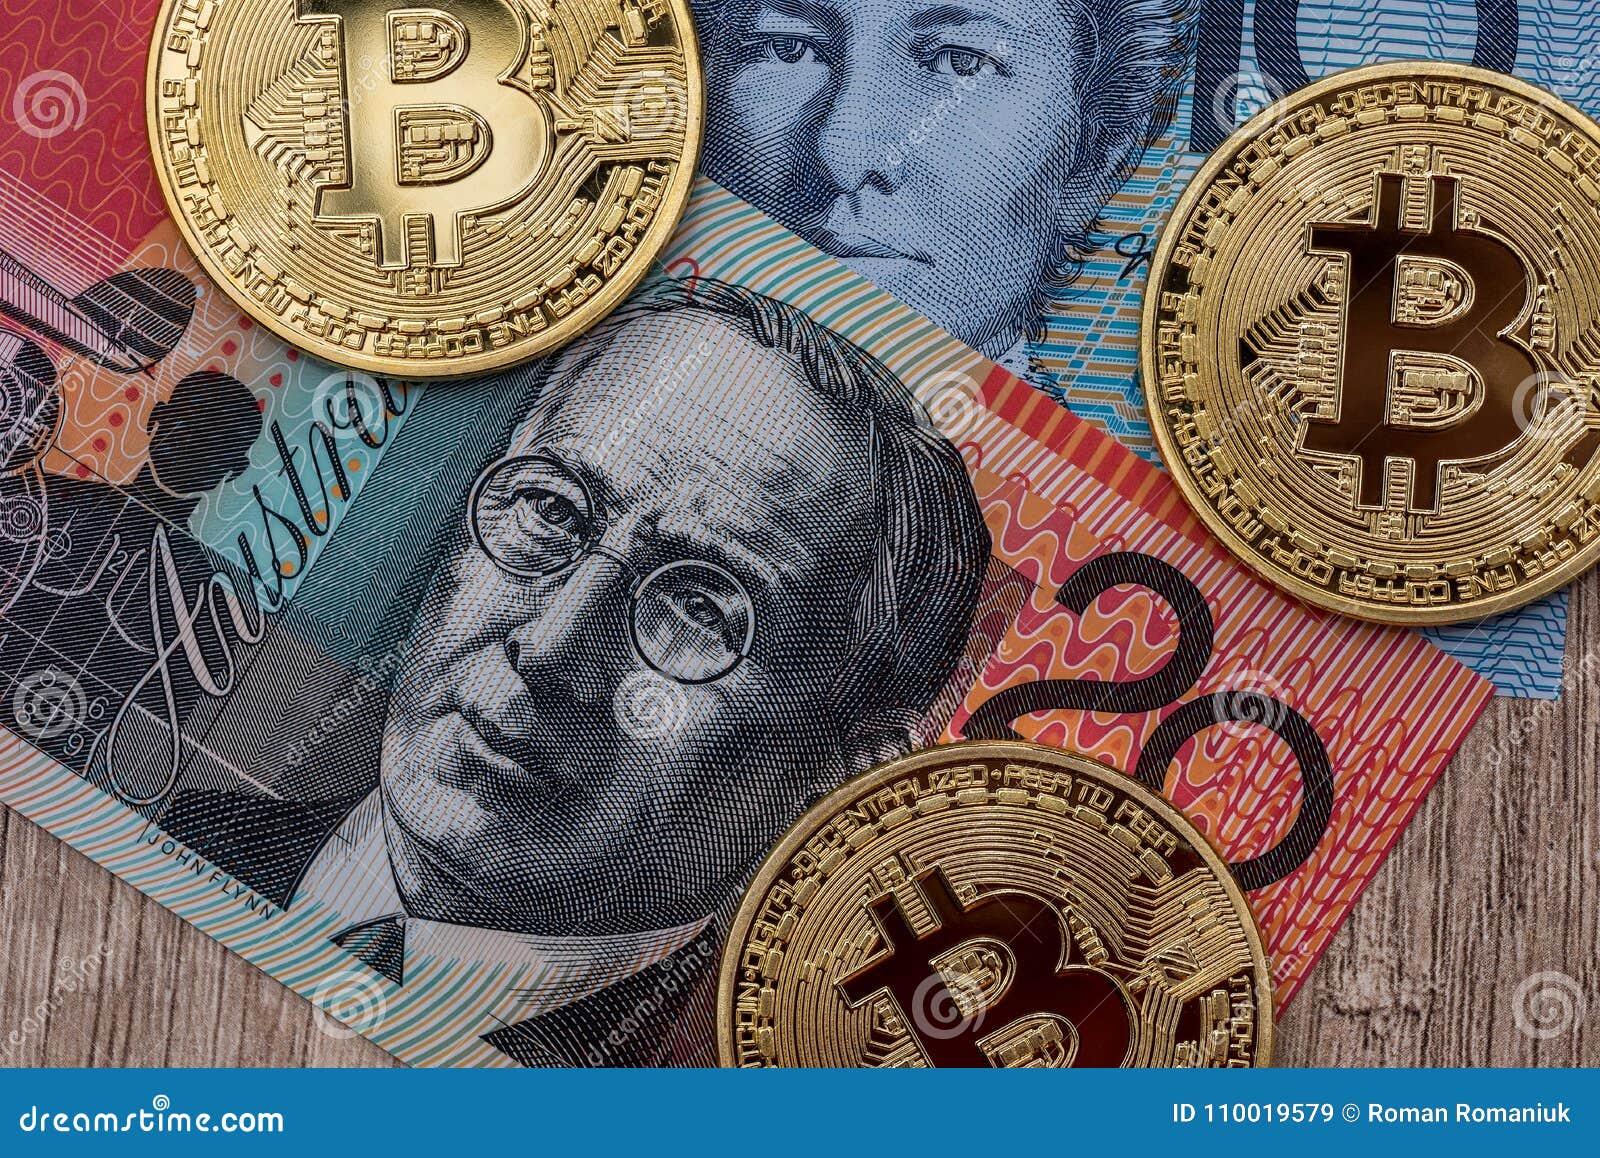 buy bitcoin australian dollar